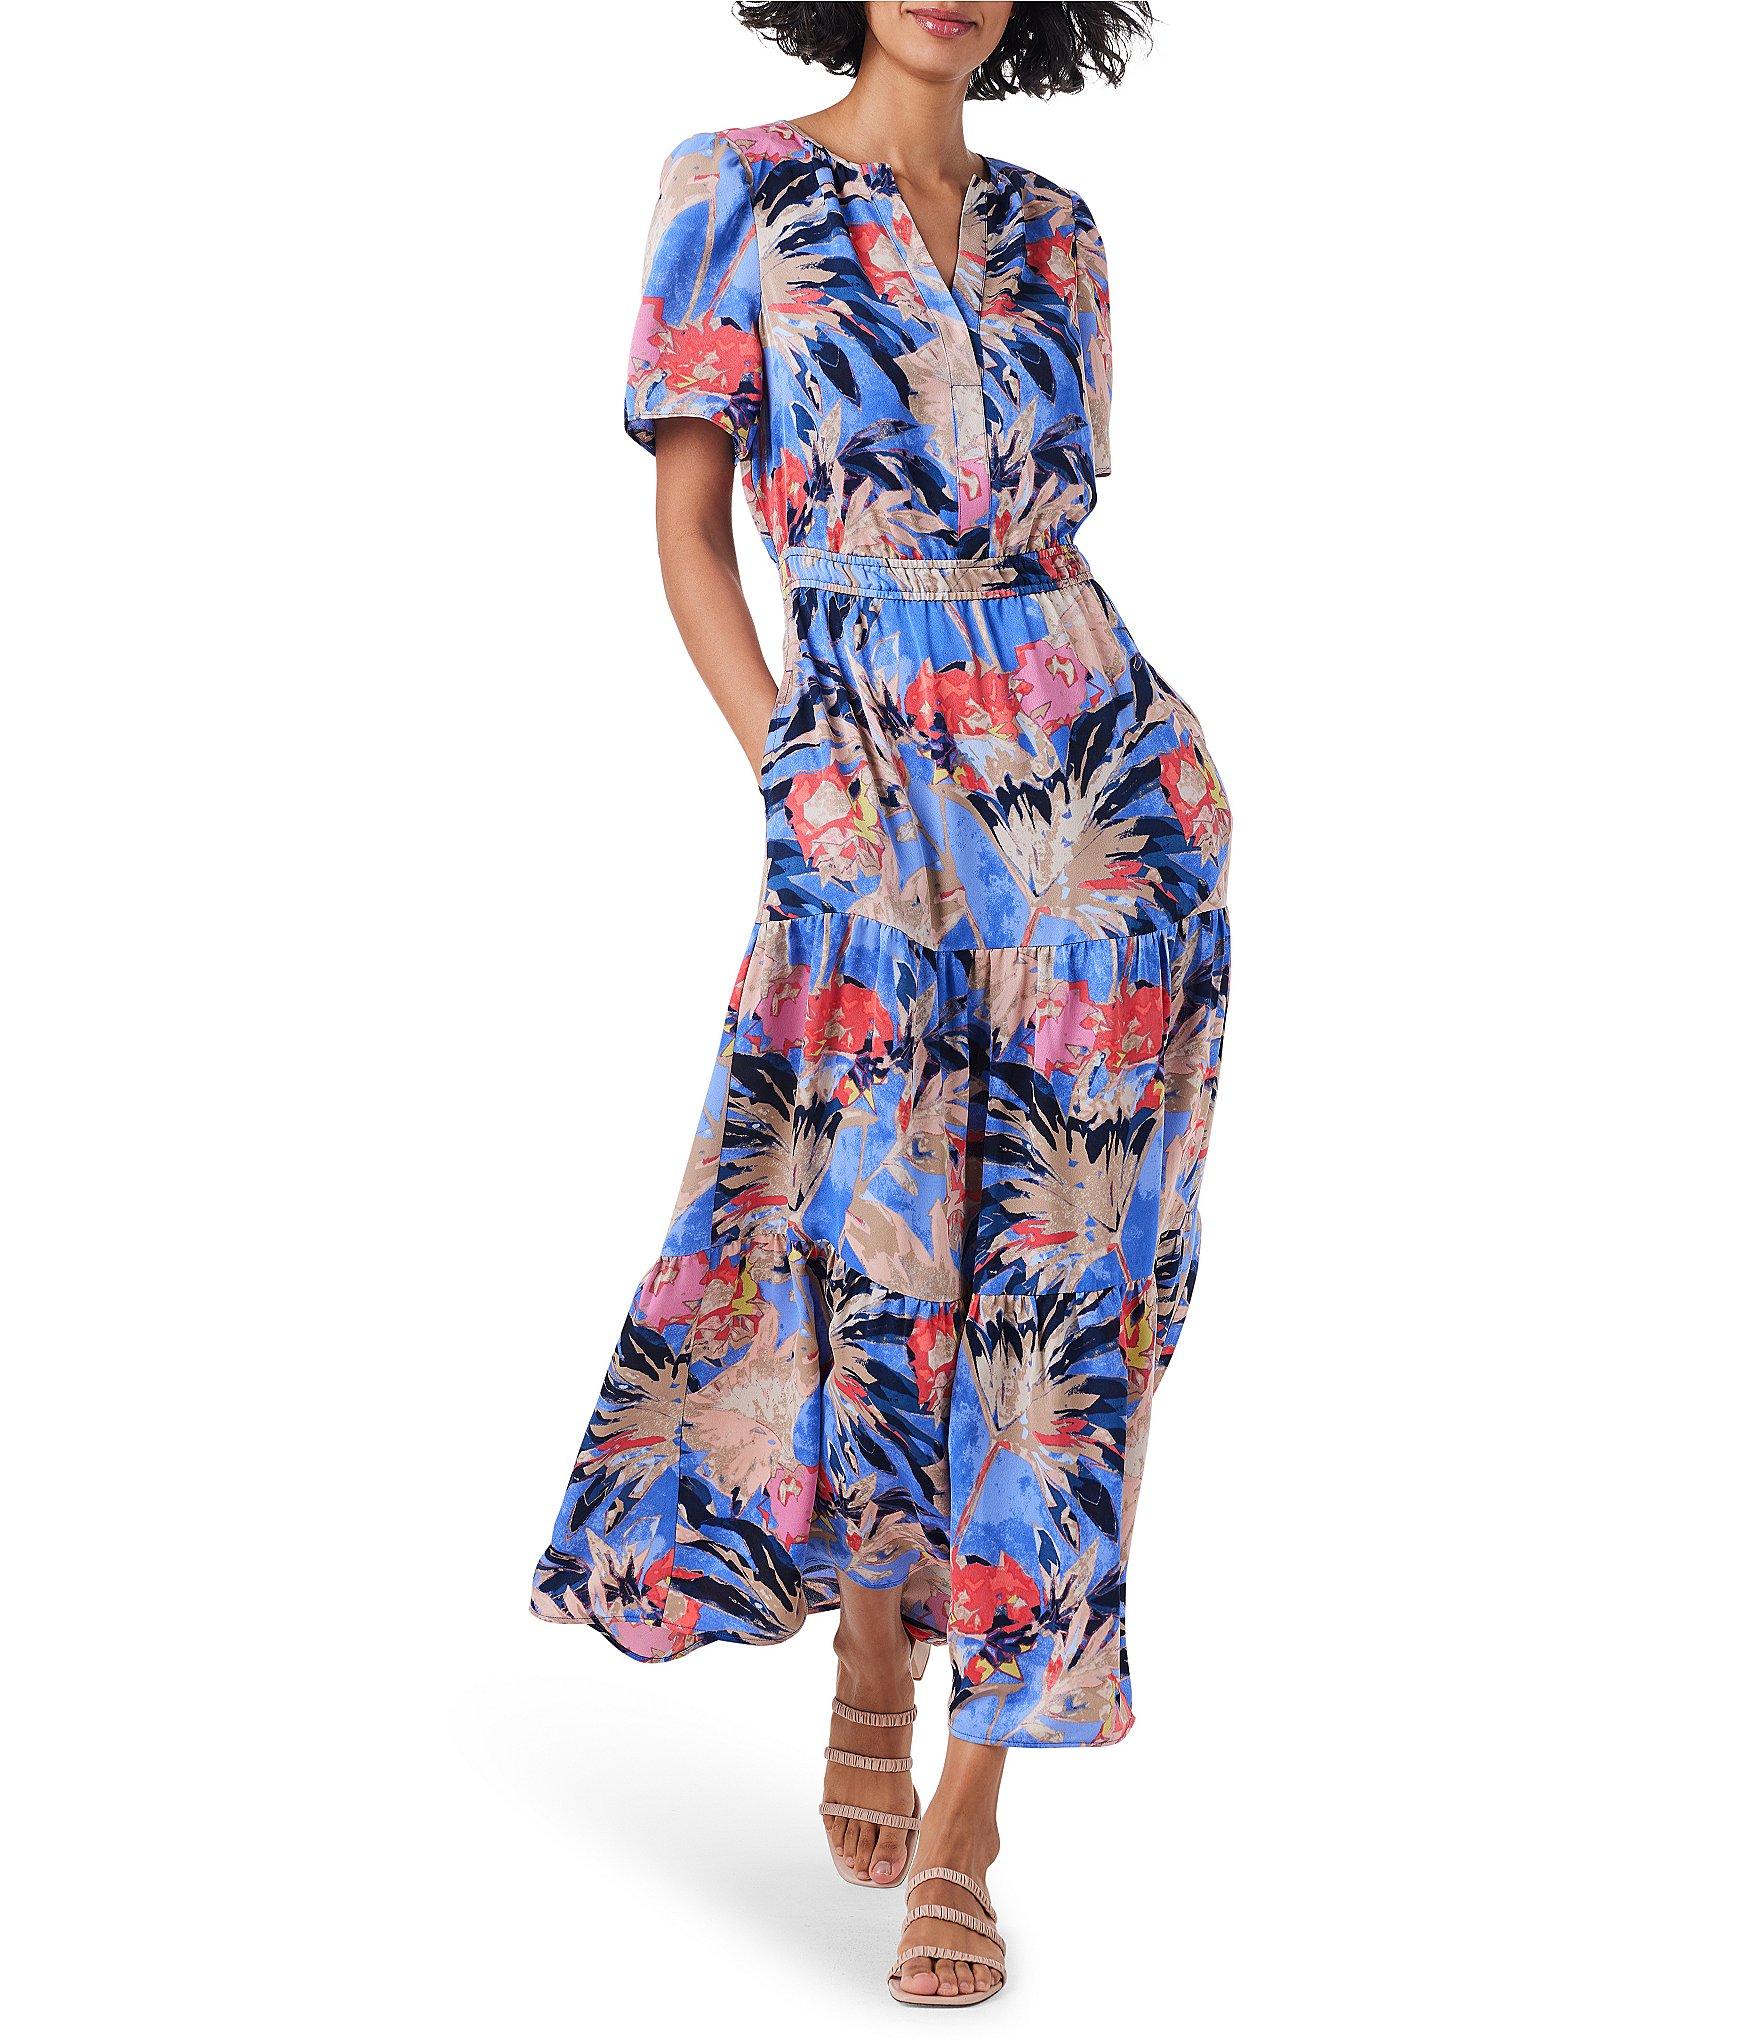 Nic + Zoe - Designer Clothing Jacksonville FL Boutique - Linda Cunningham